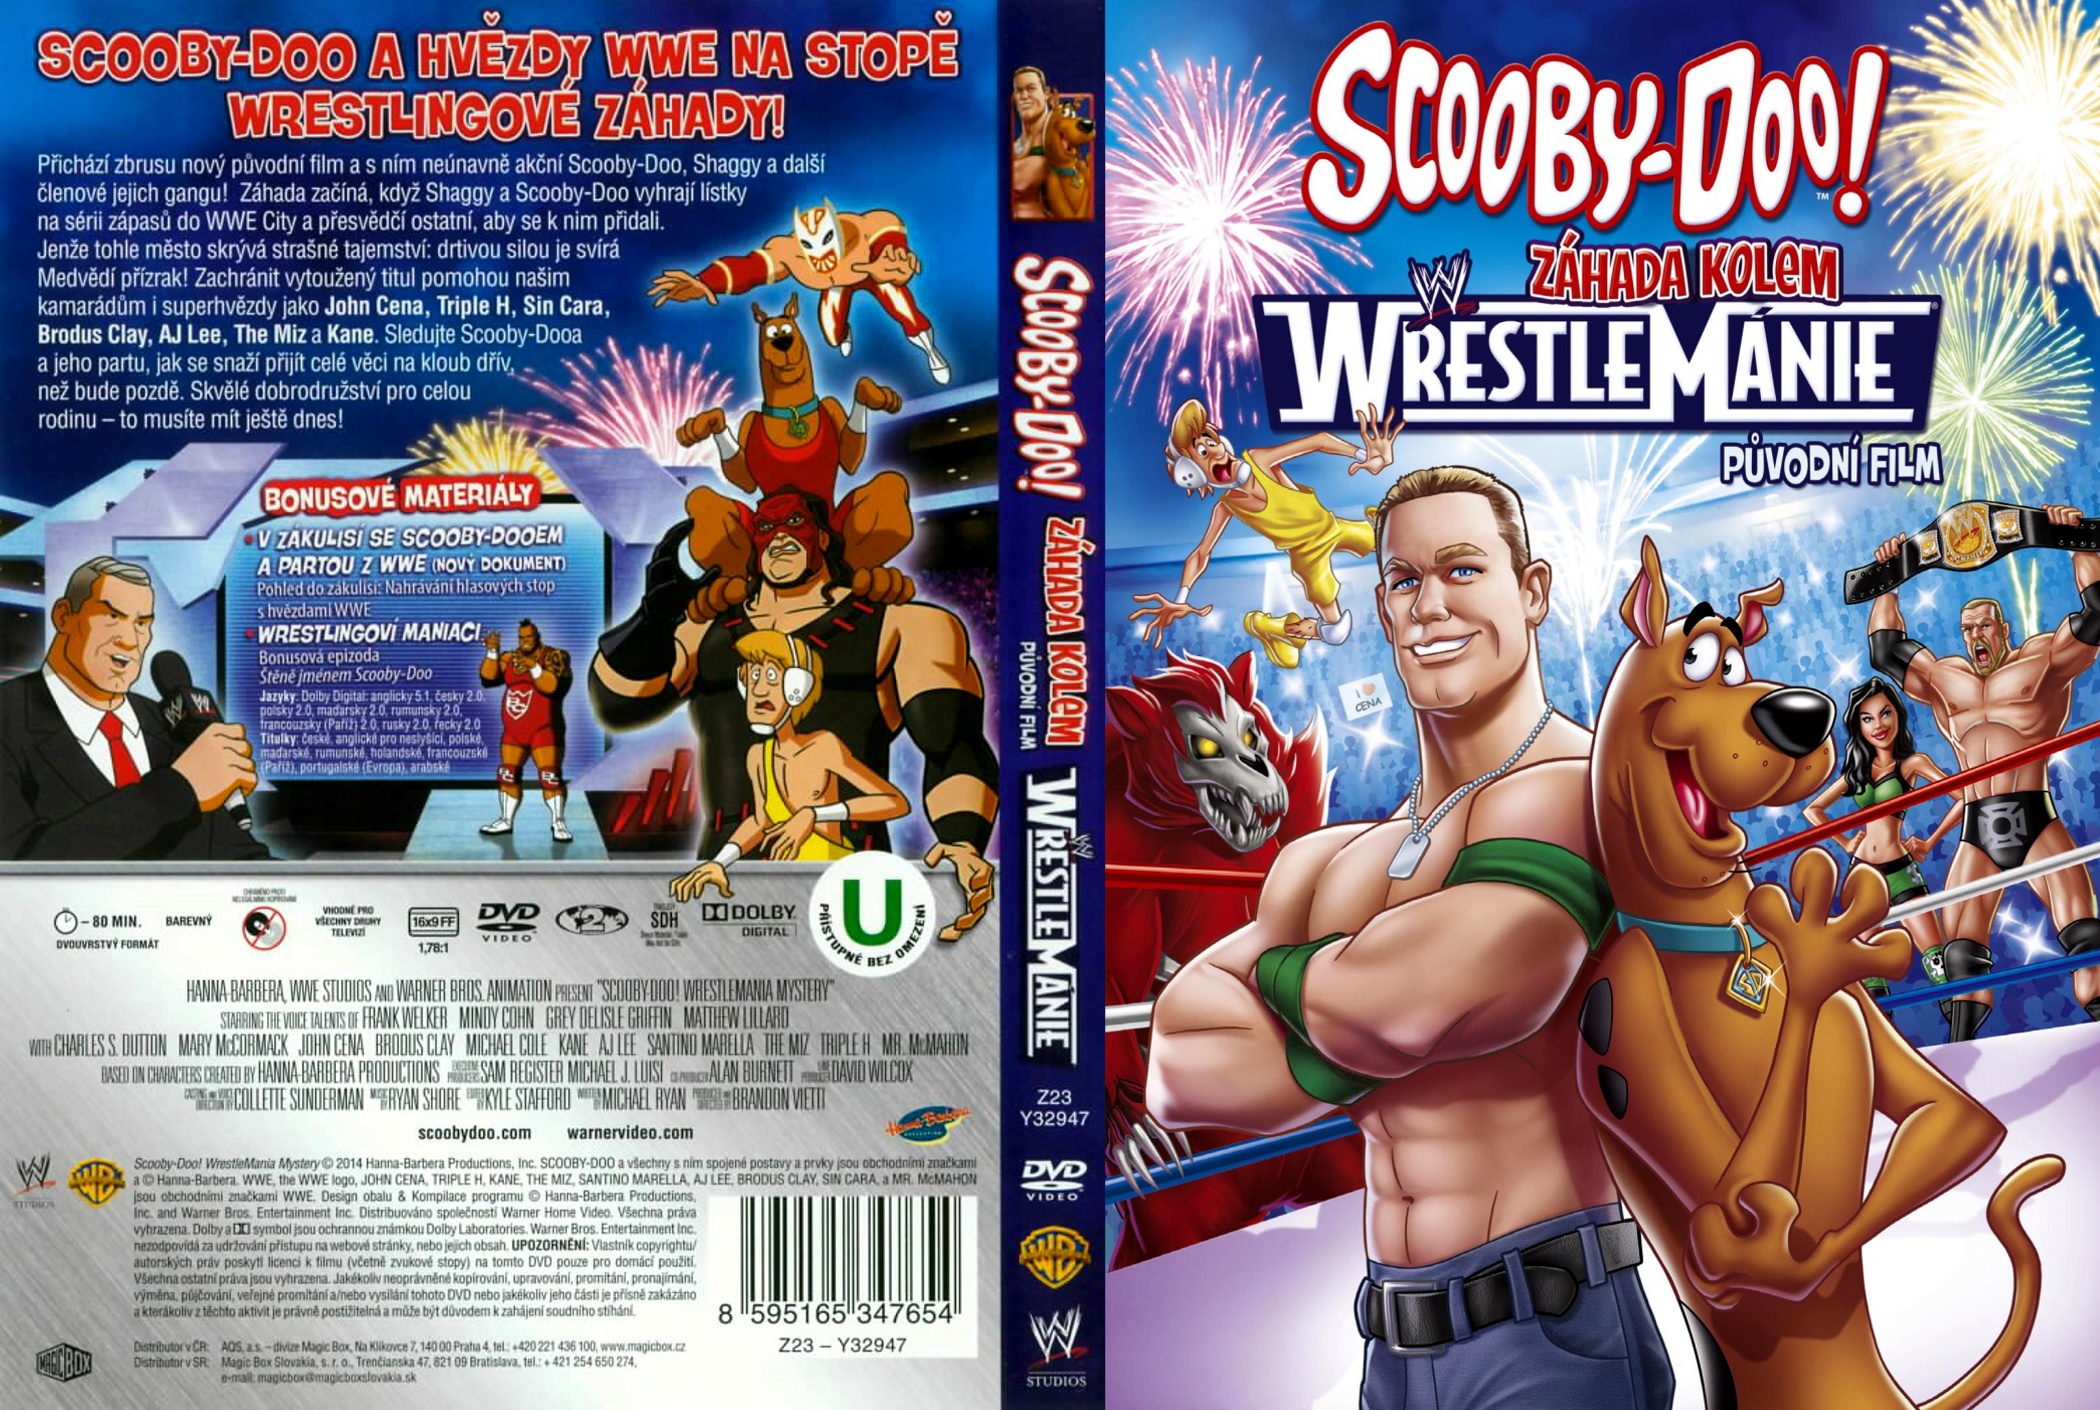 Scooby_Doo-Zahada_Kolem_Wrestlemanie-Cover